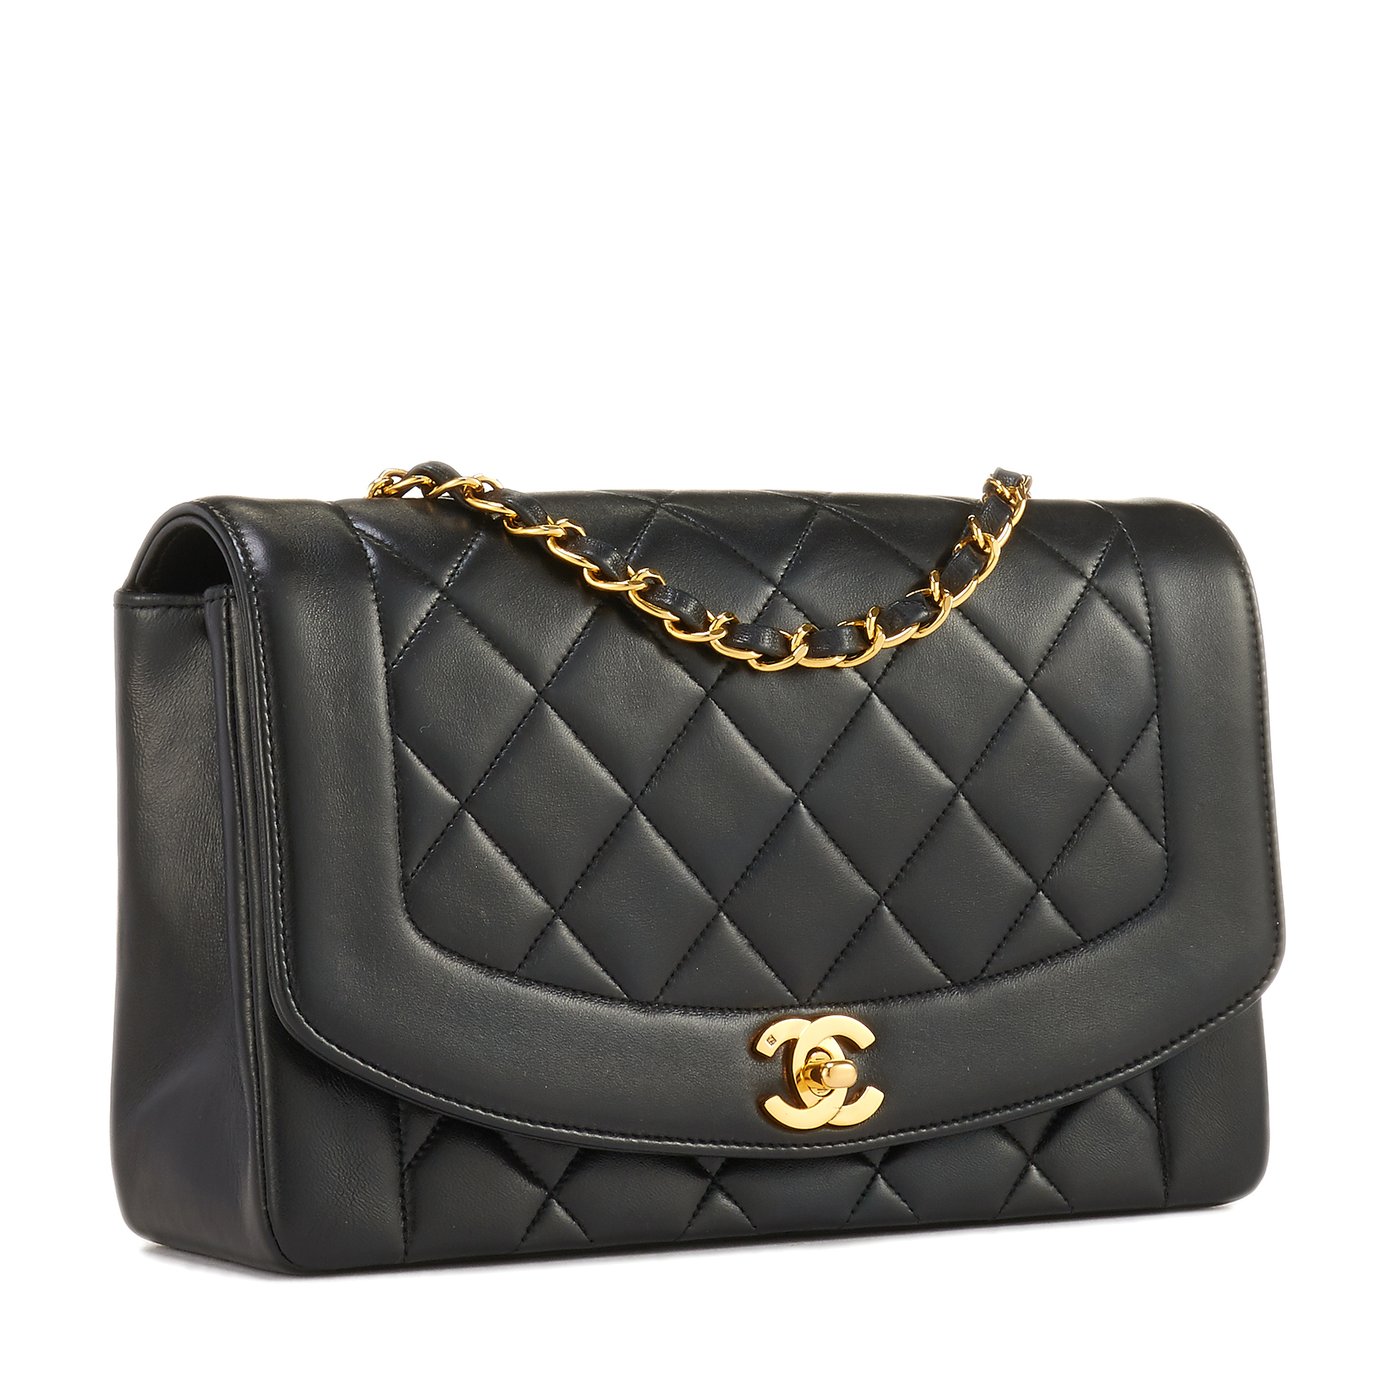 double flap chanel handbag black